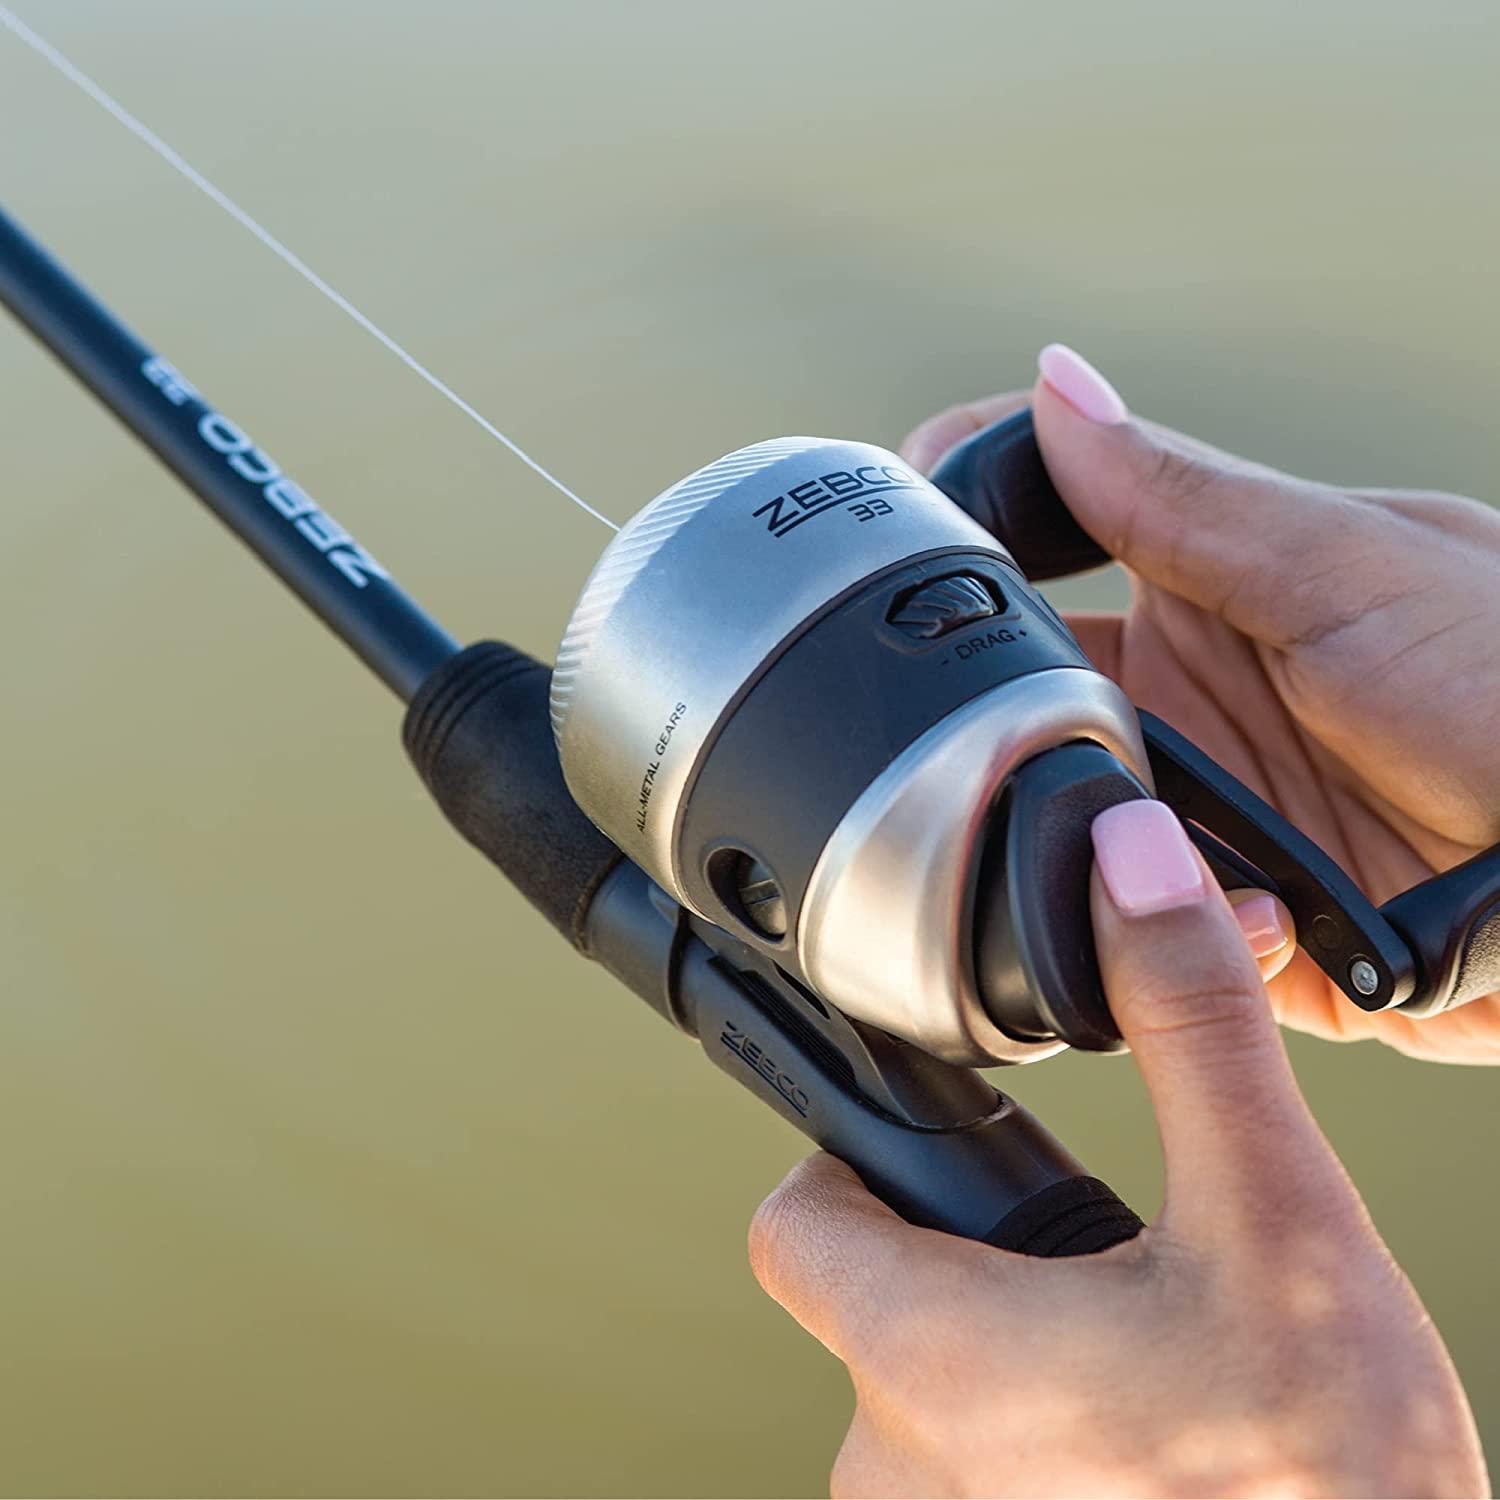 Zebco 33 Spincast Fishing Reel Quickset Anti-Reverse with Bite